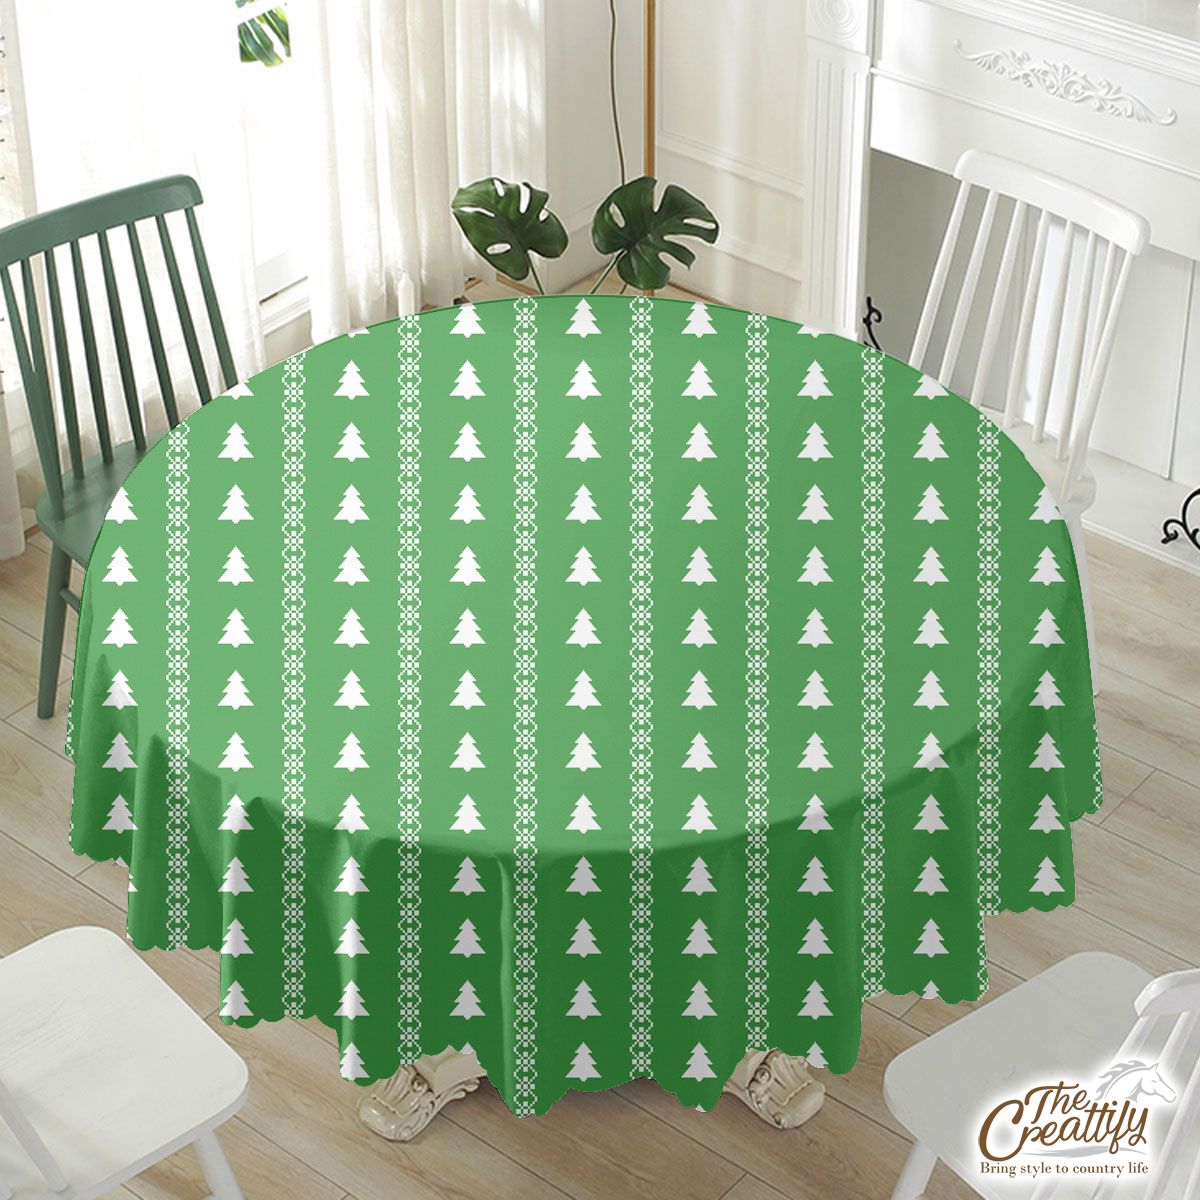 Christmas Tree, Pine Tree, Christmas Plant On Green Waterproof Tablecloth